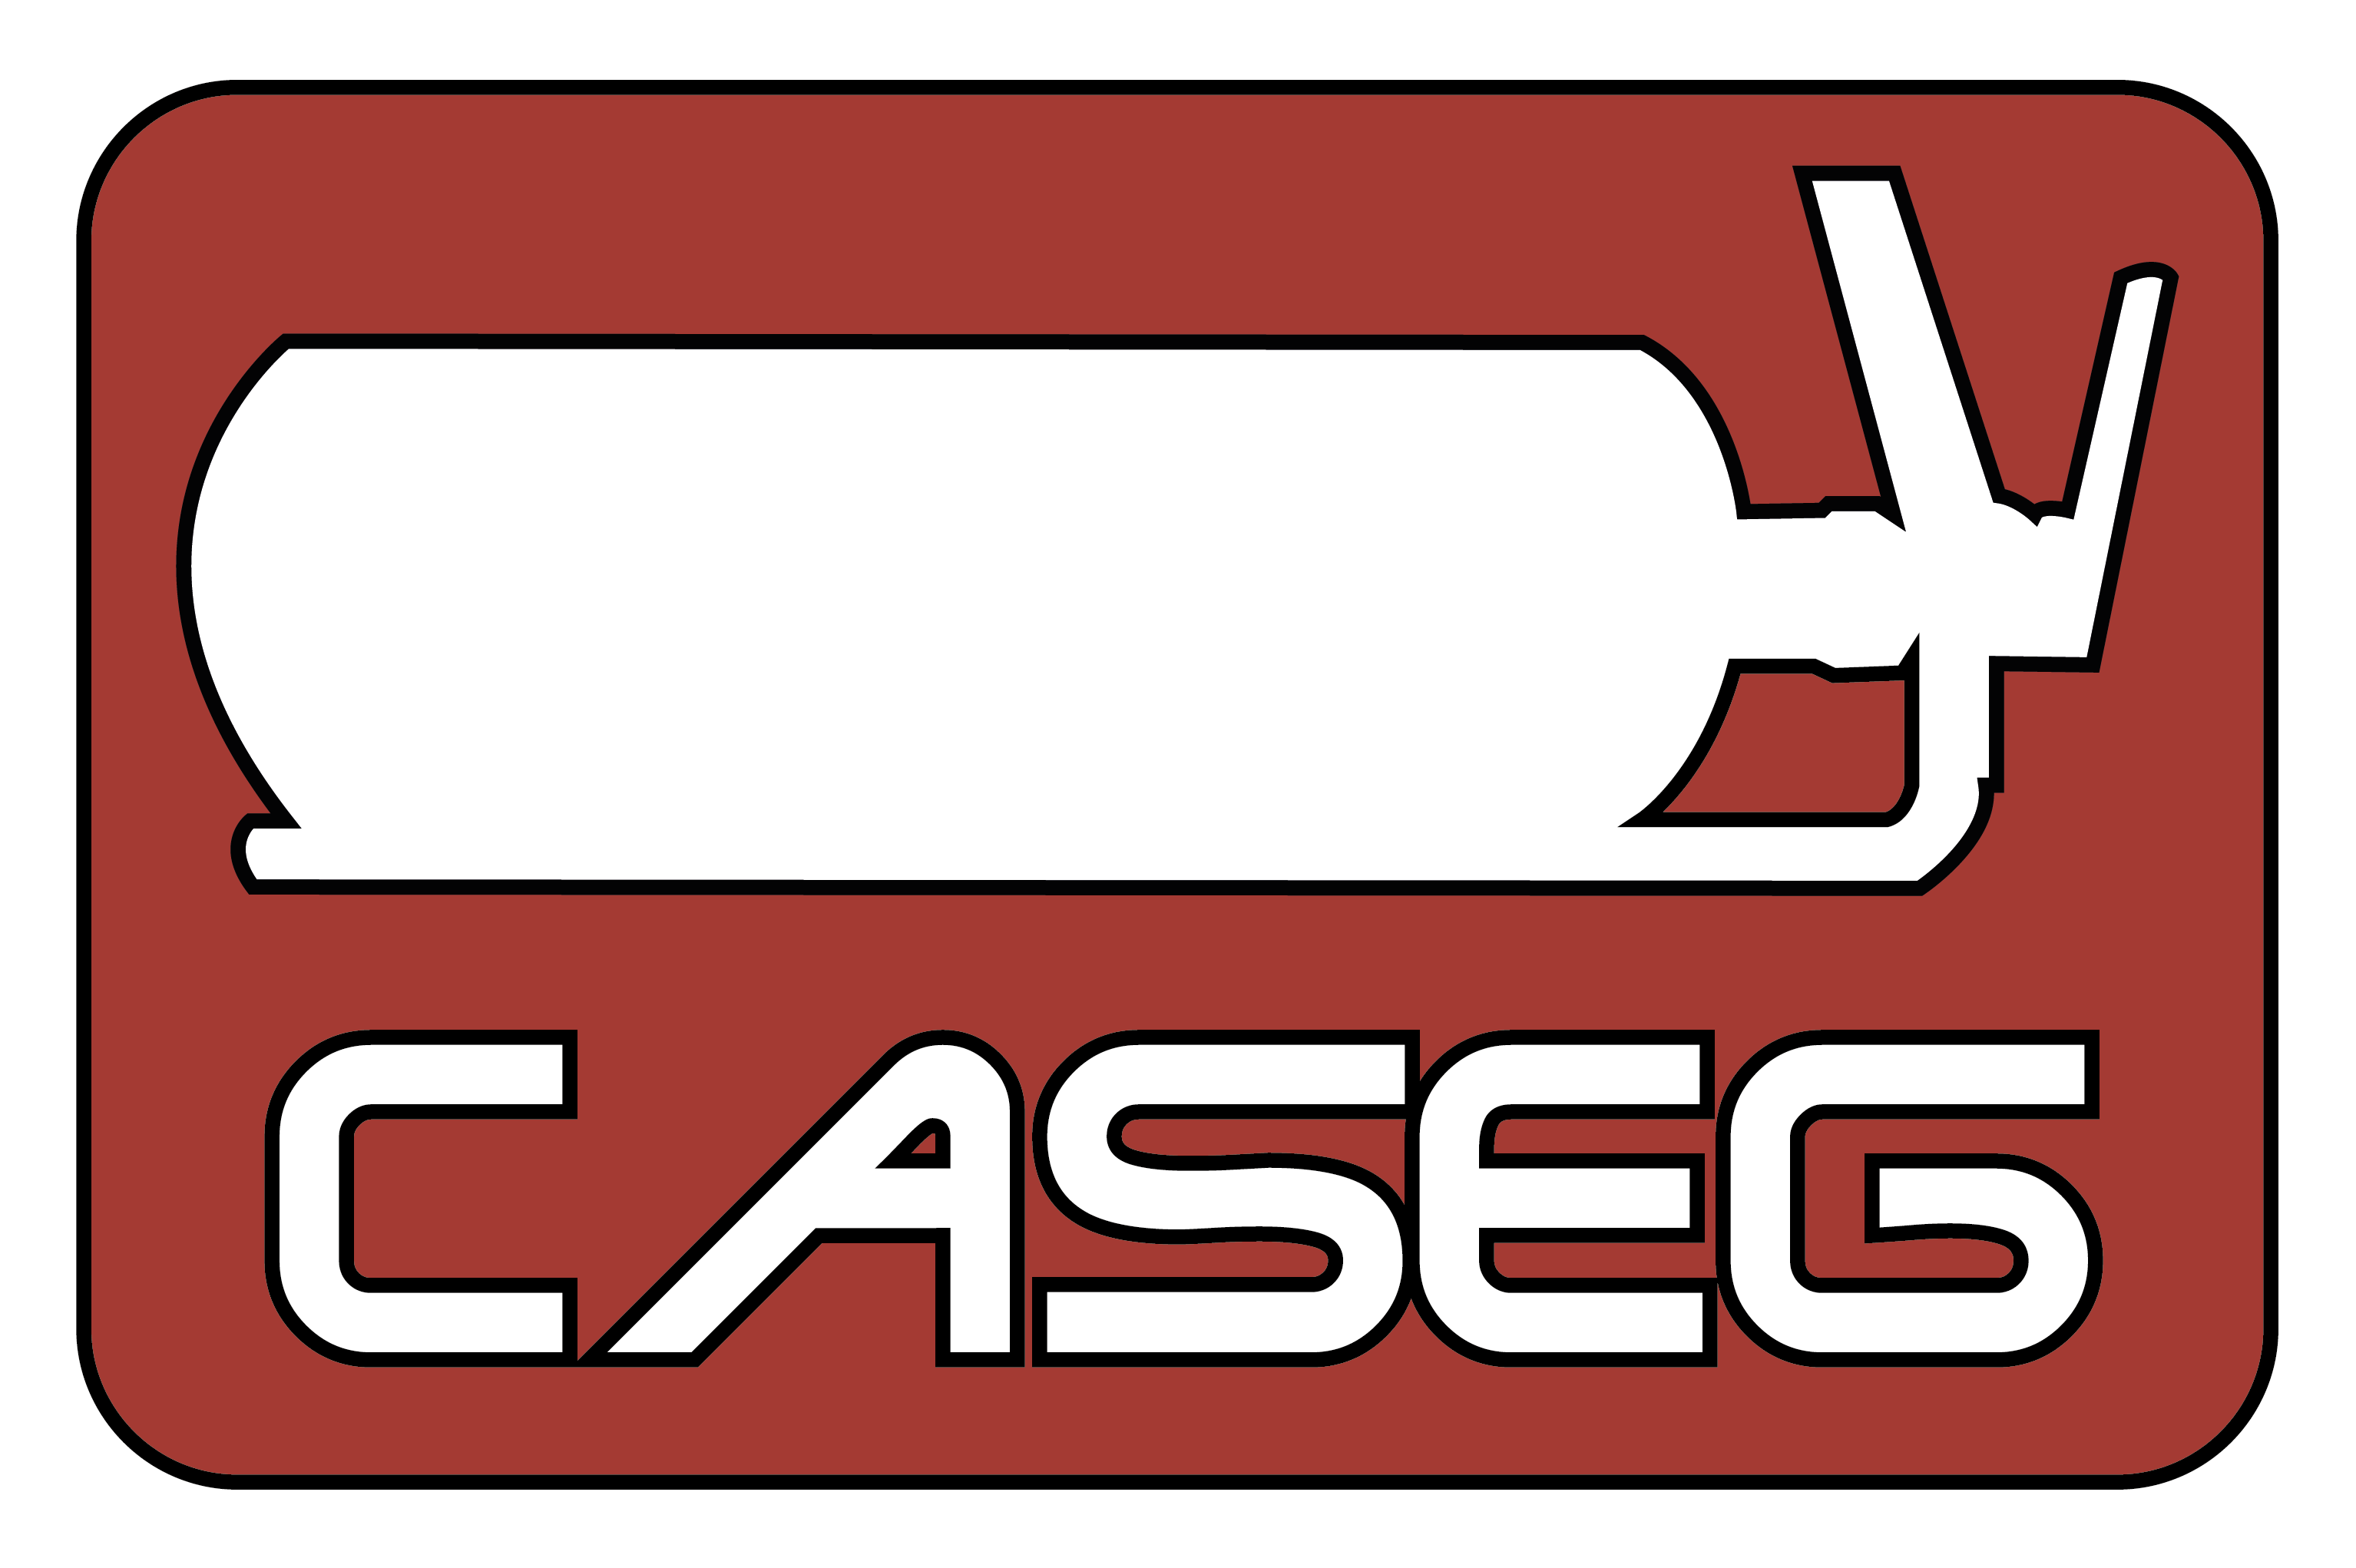 caseg